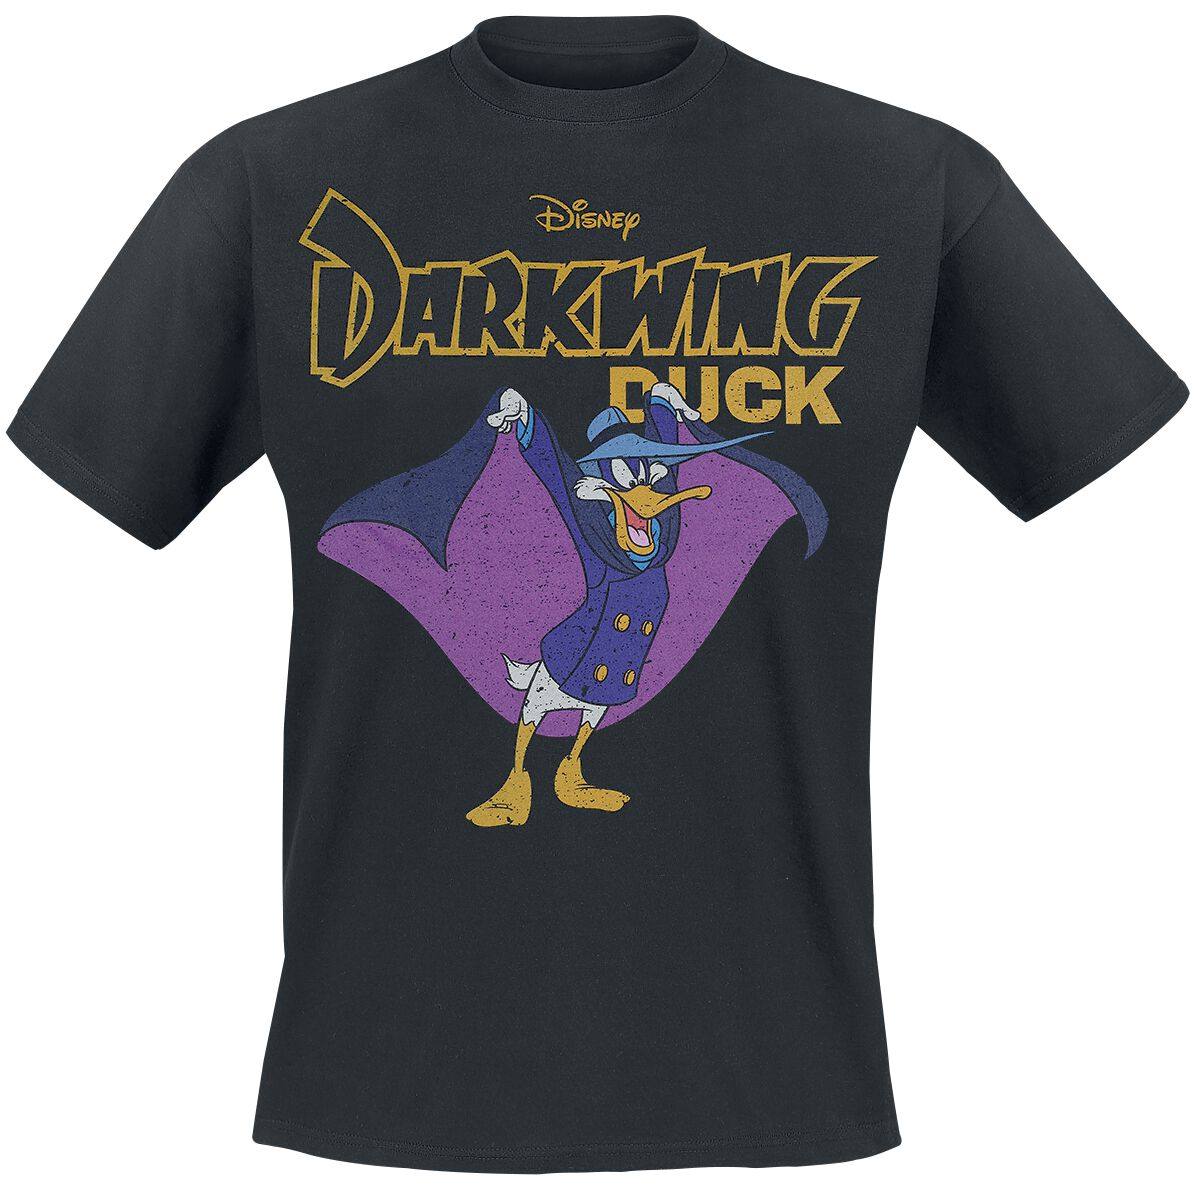 Darkwing Duck Darkwing Duck T-Shirt black